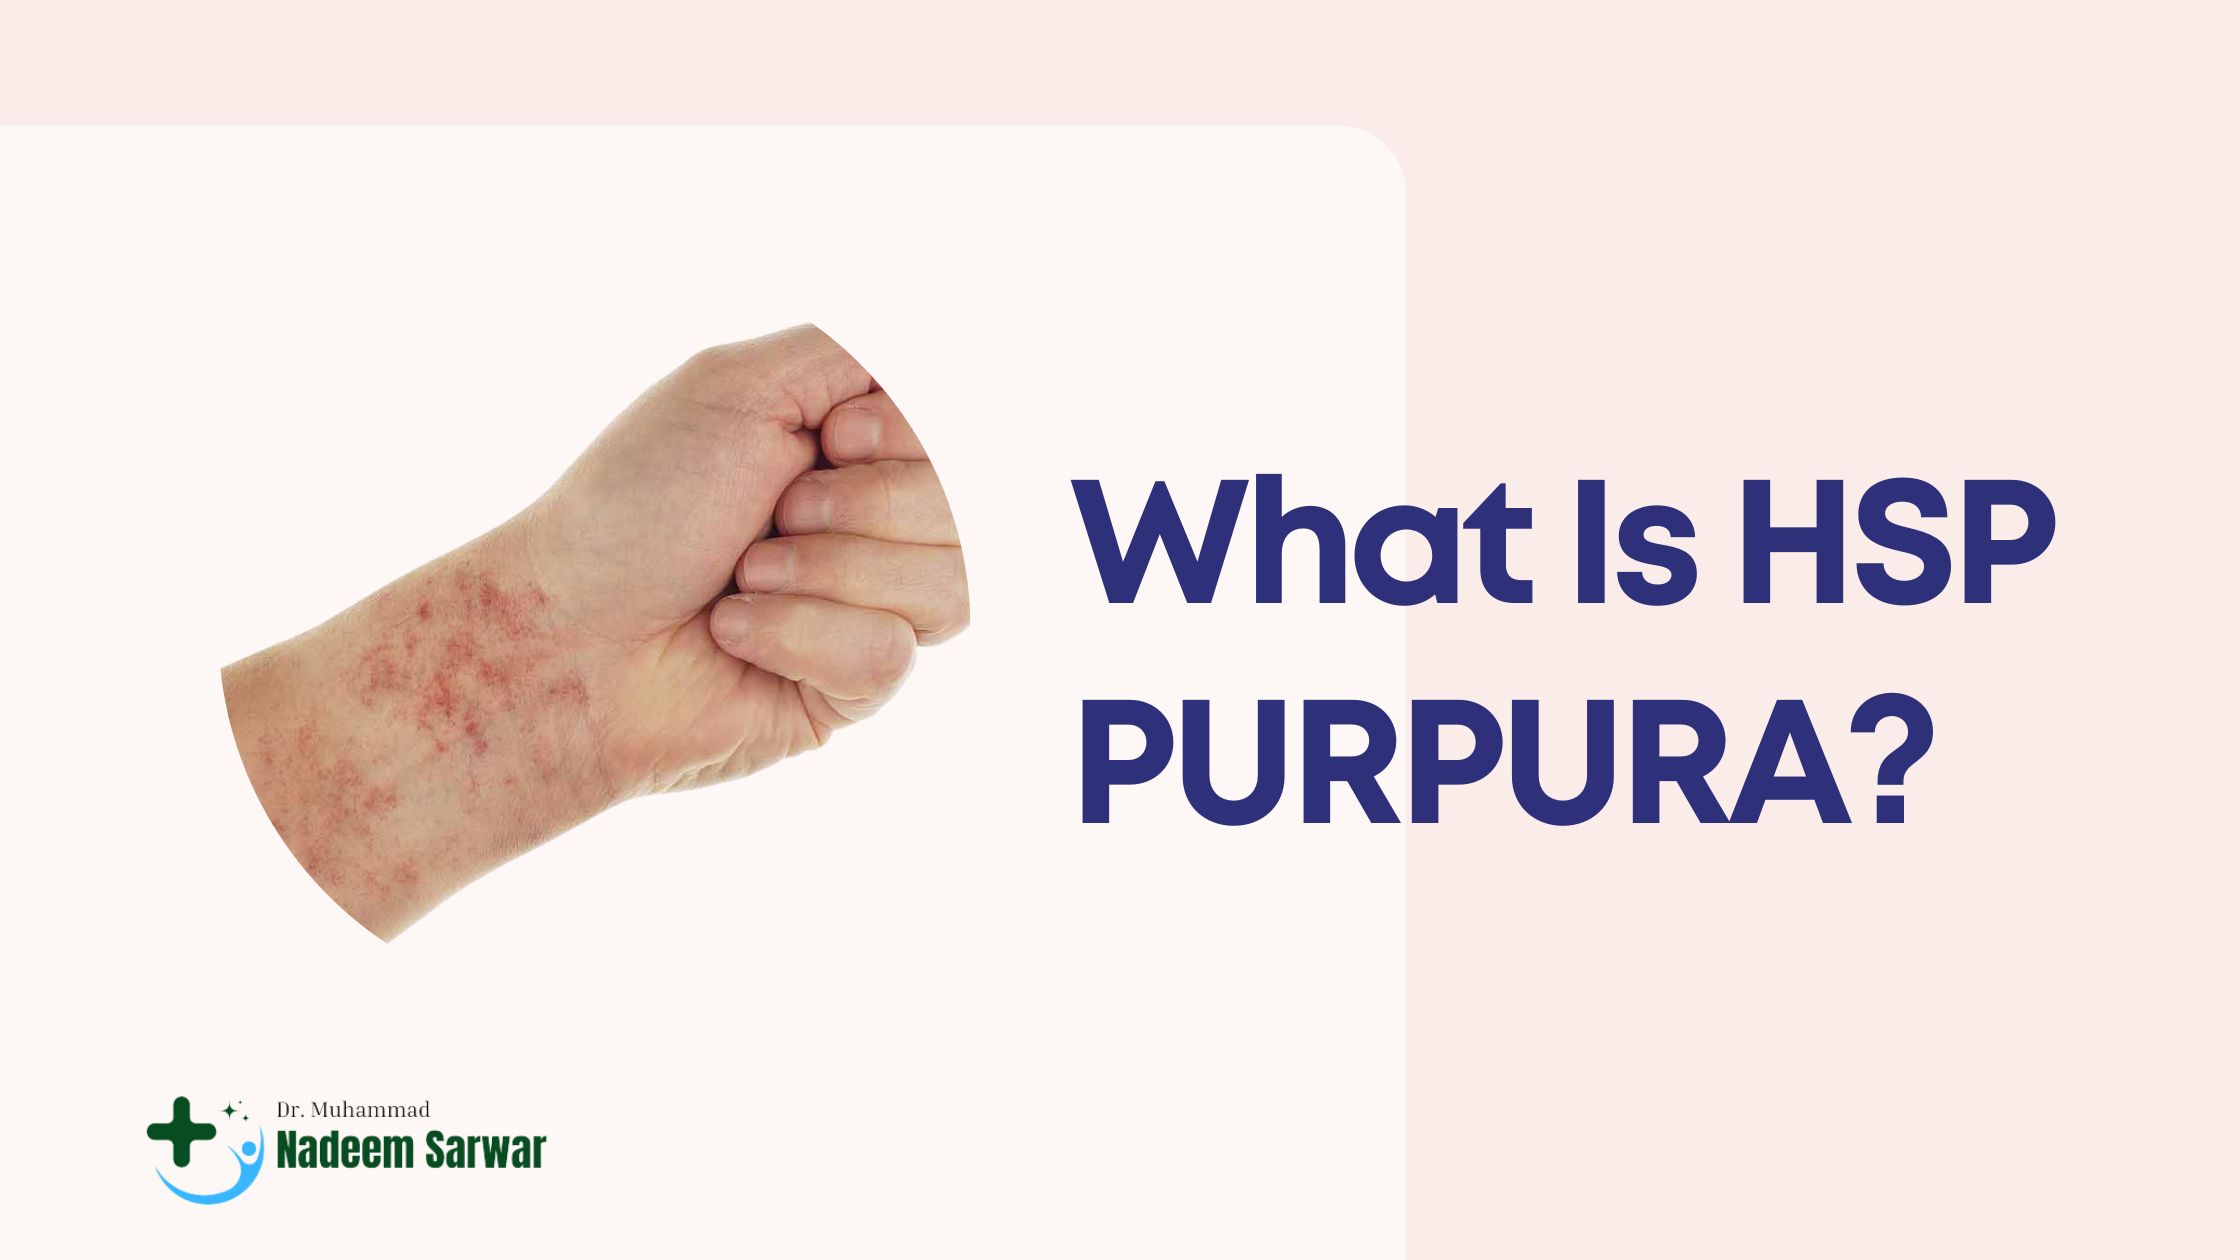 What Is HSP PURPURA? HSP PURPURA Treatment in Homoeopathy